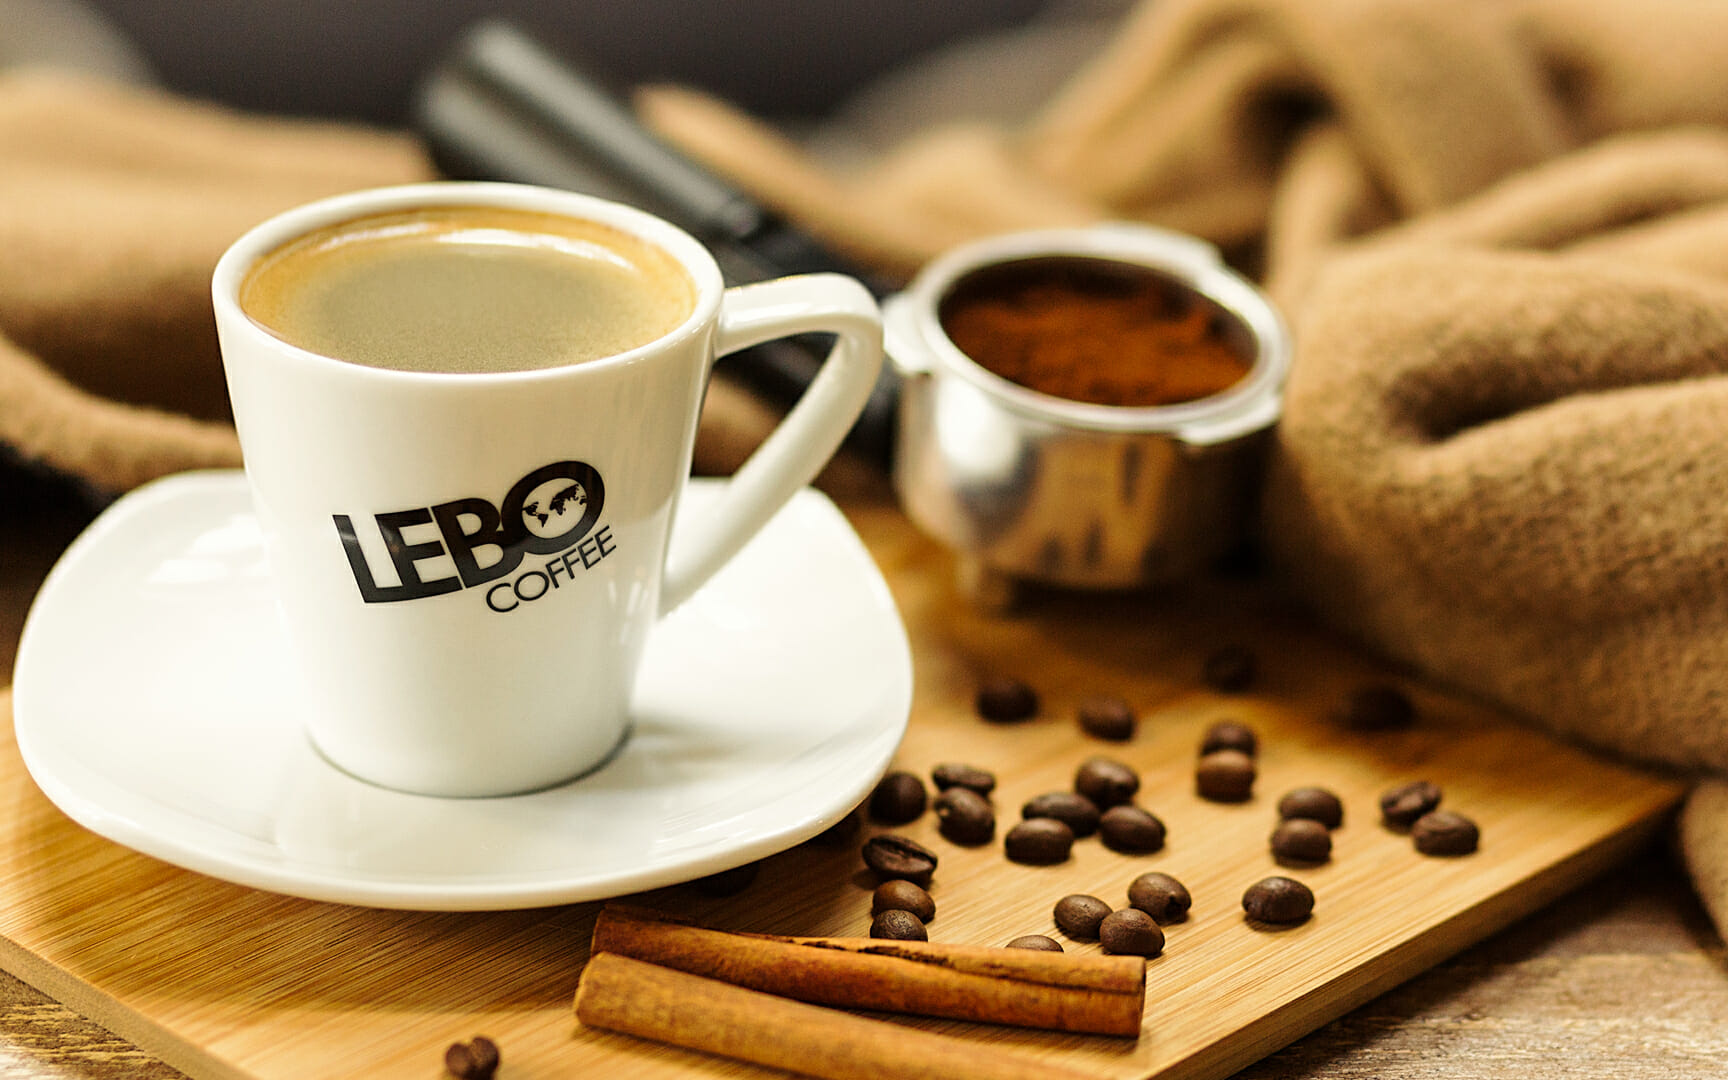 Студия Мухина Дизайн (Muhina Design) разместила логотип кофе Lebo на фирменных чашках бренда